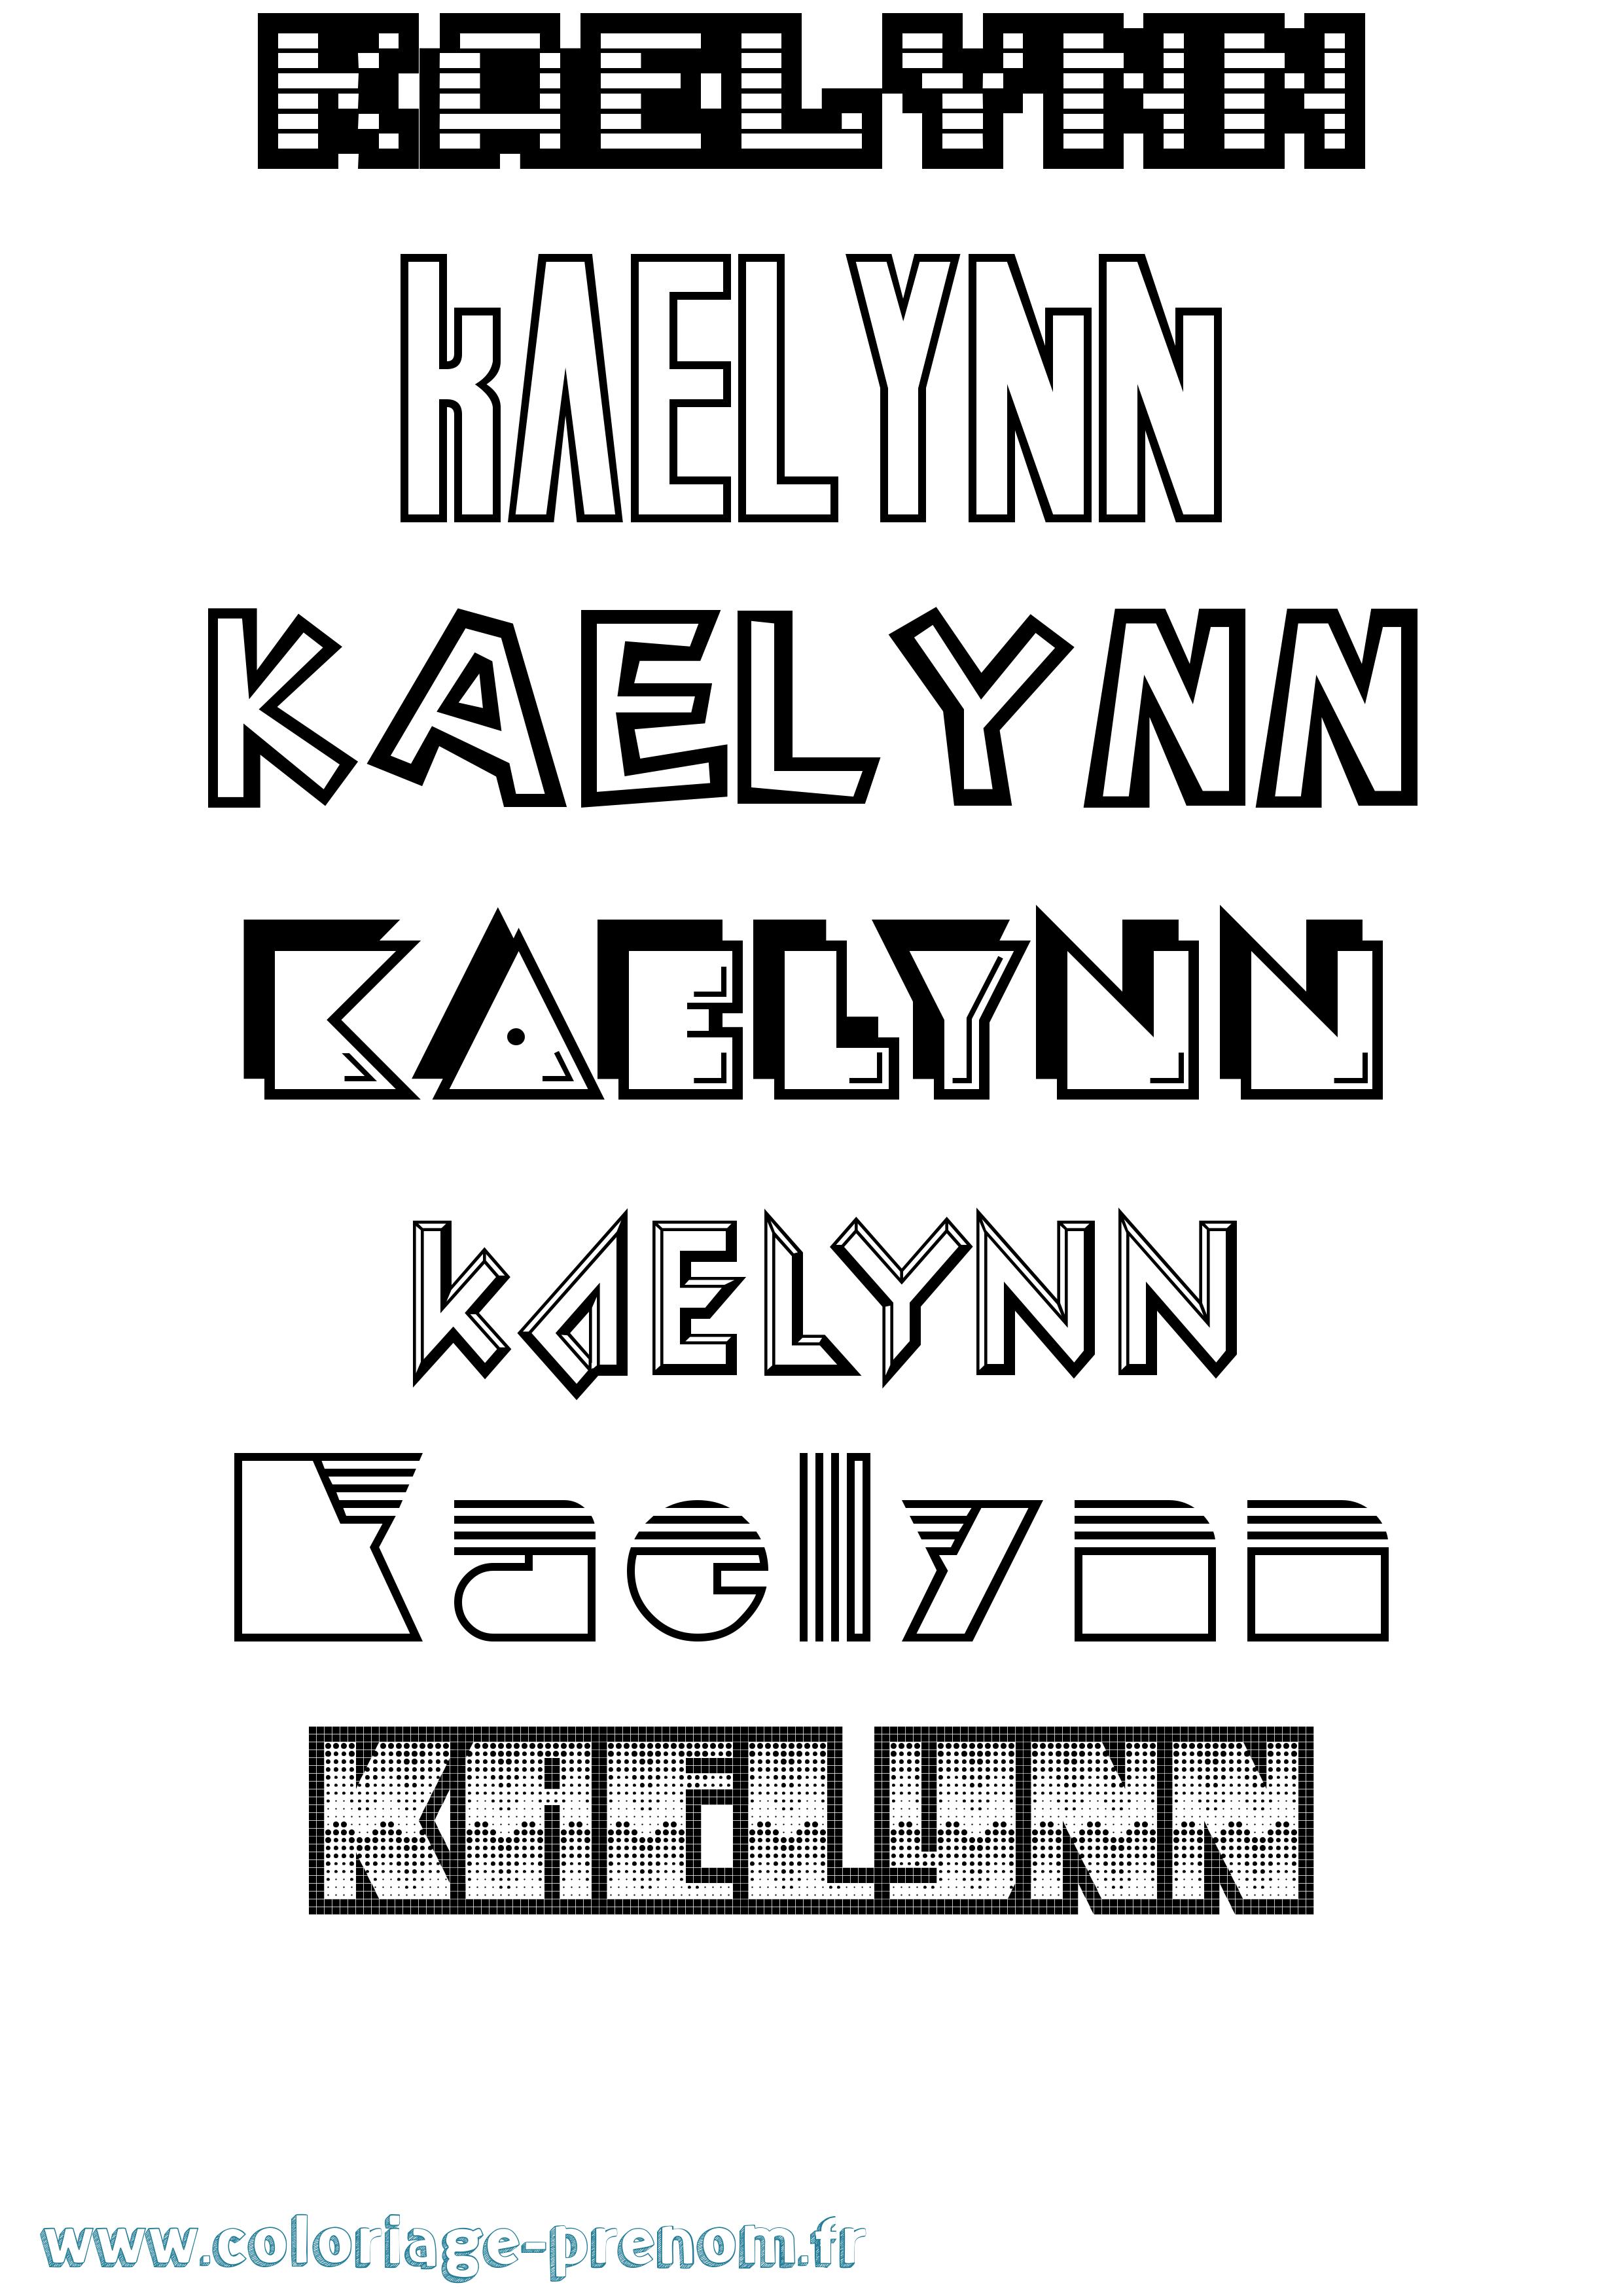 Coloriage prénom Kaelynn Jeux Vidéos